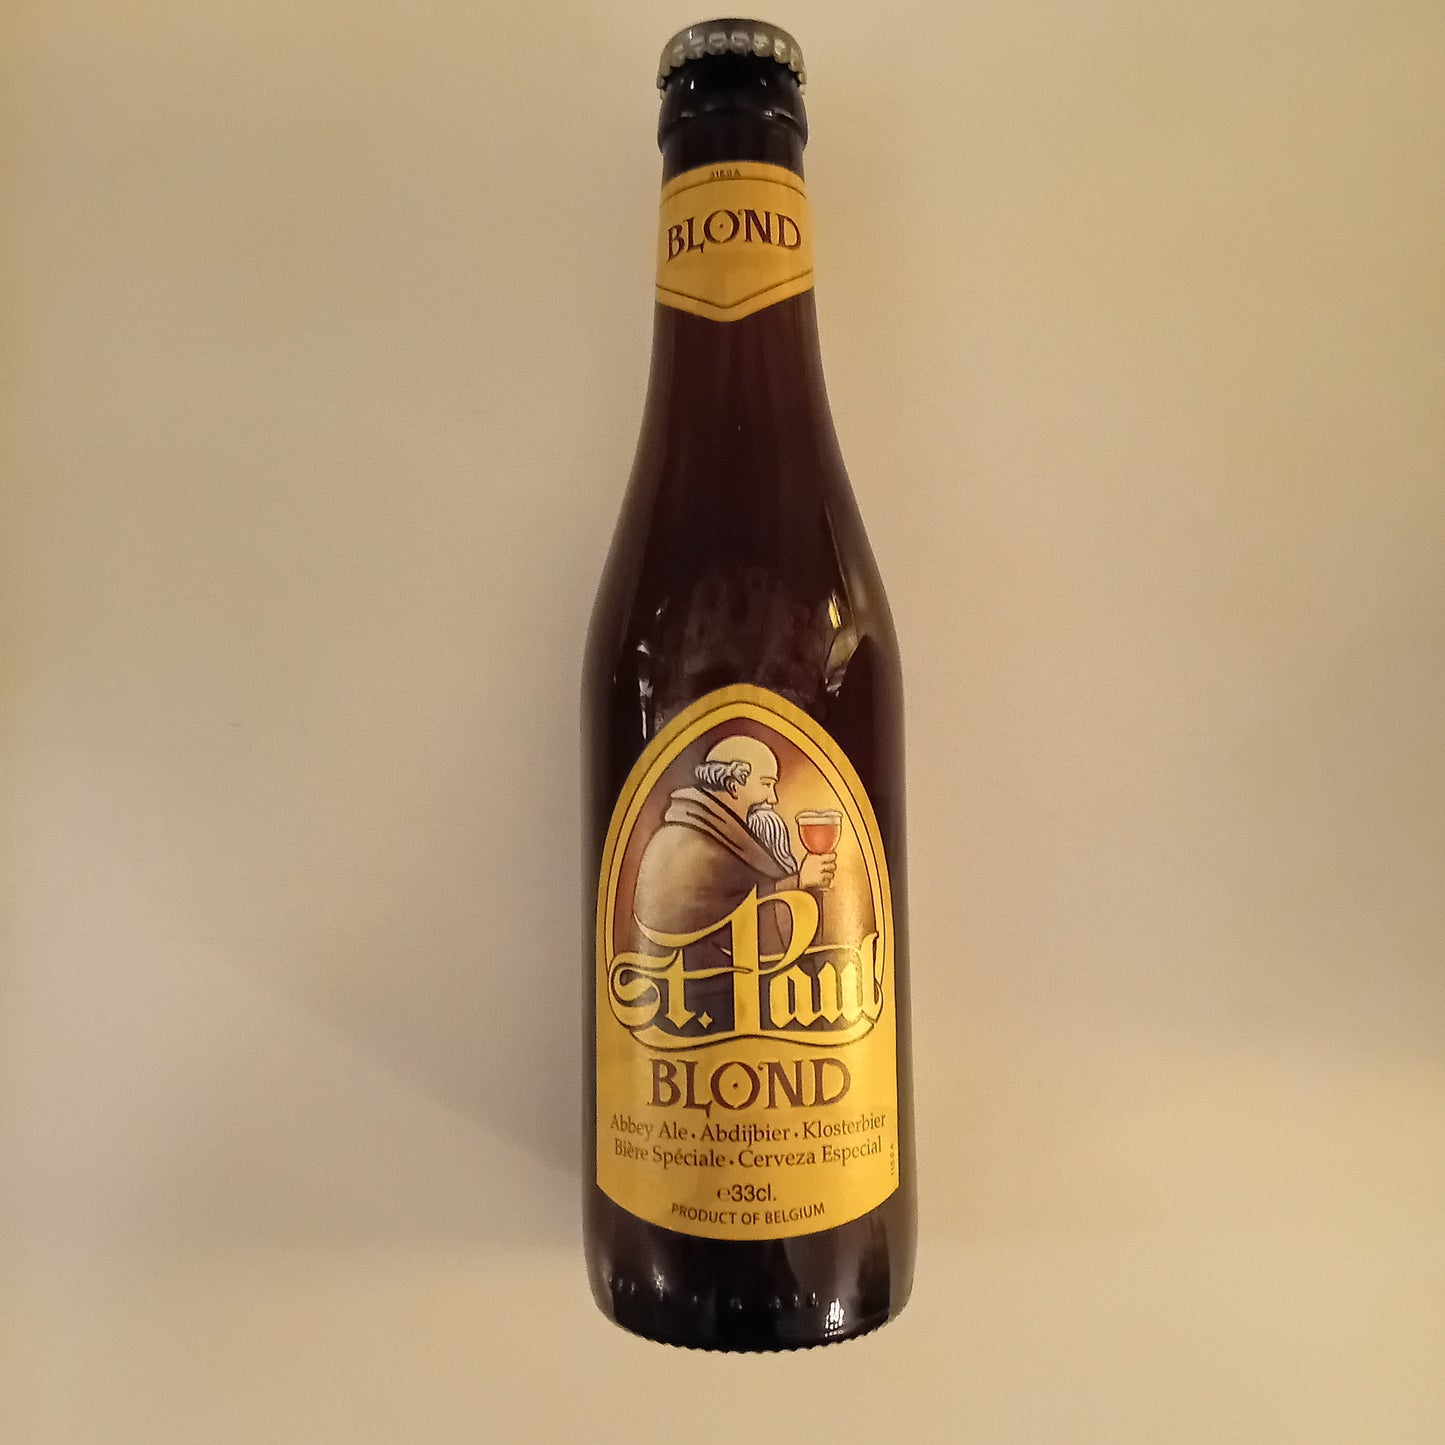 St Paul Blond - 330ml - 5,3%